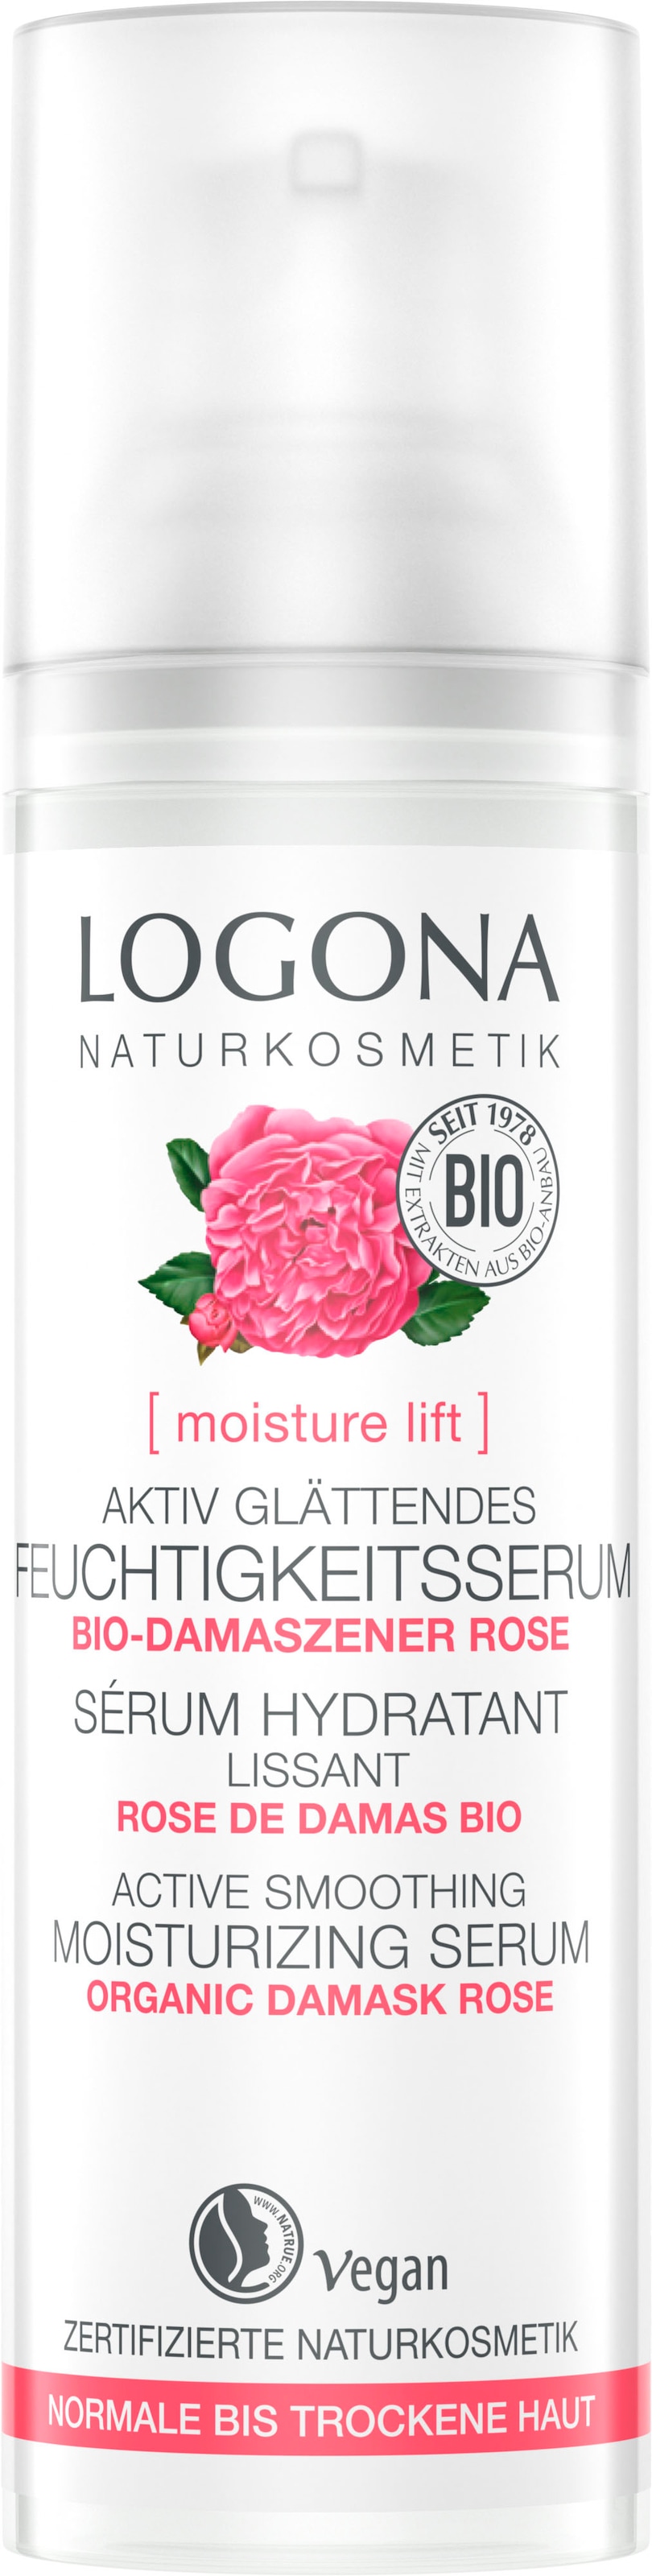 LOGONA Gesichtsserum »Logona moisture lift glätt Feuchtigk.serum« bei ♕